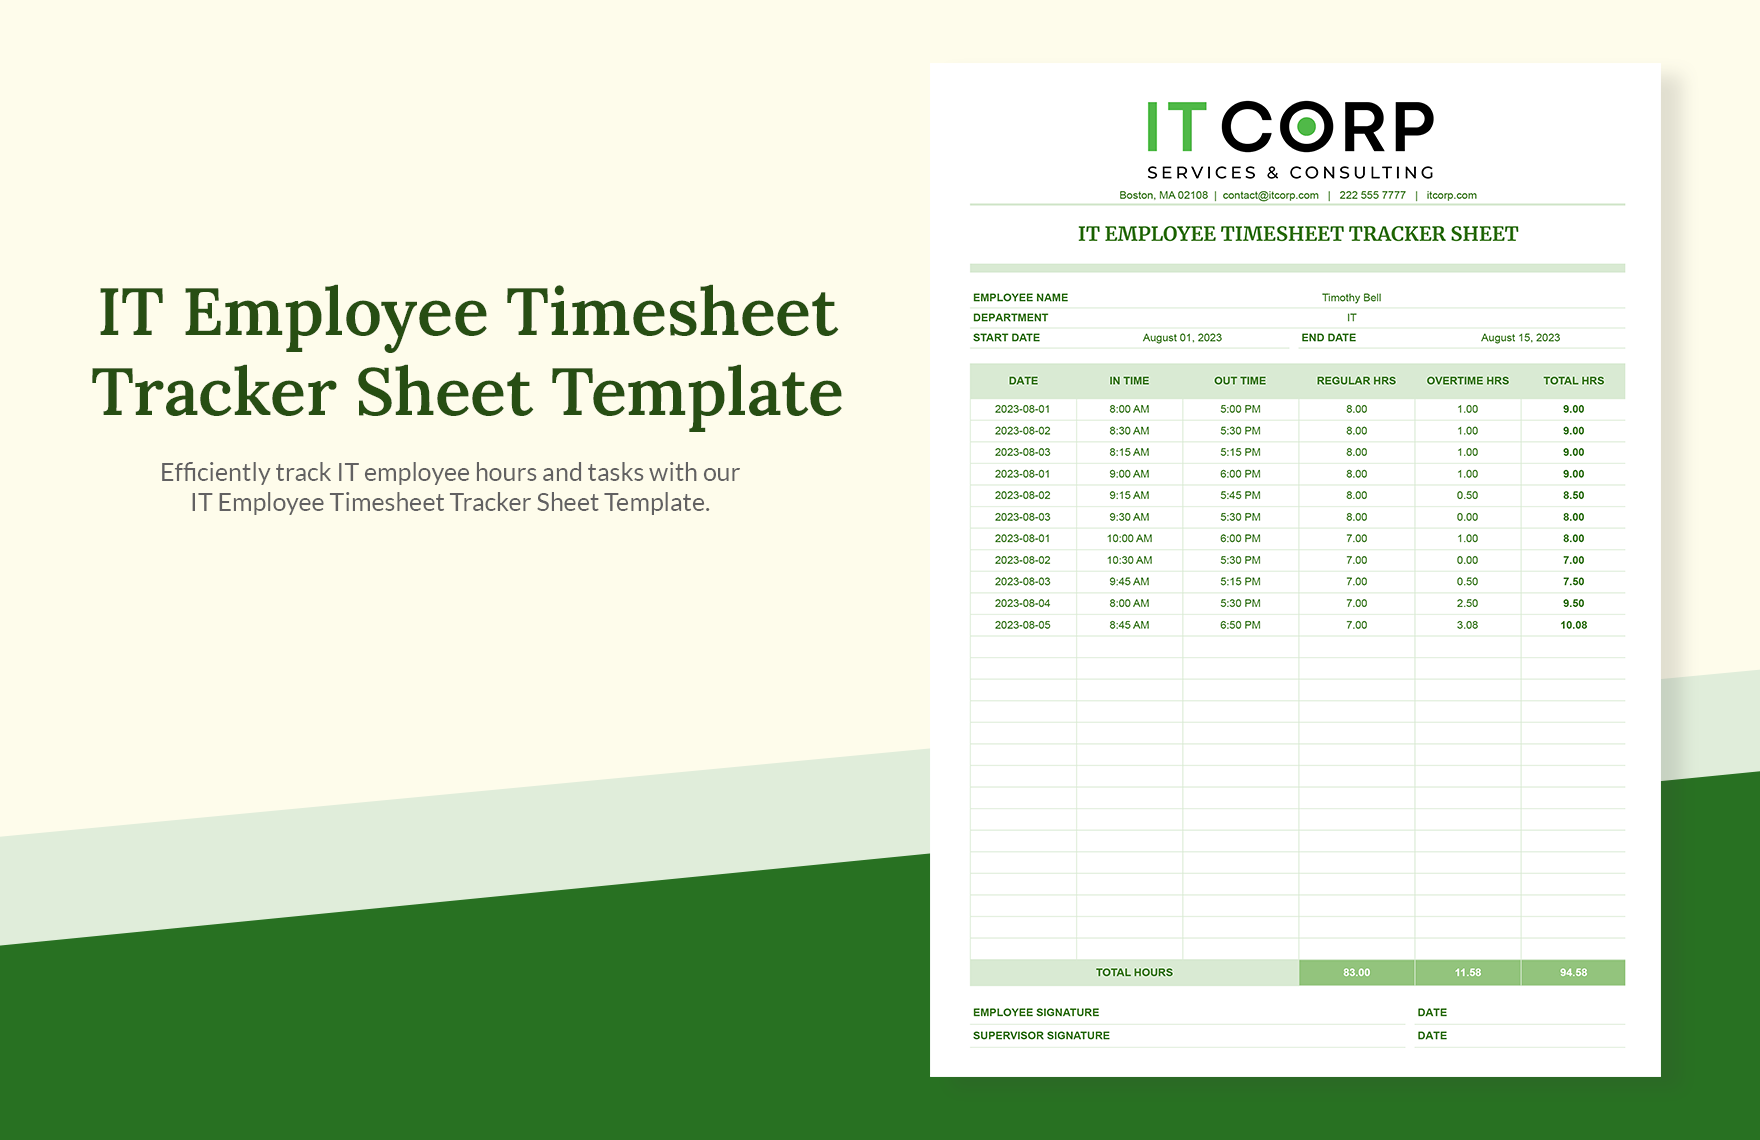 IT Employee Timesheet Tracker Sheet Template